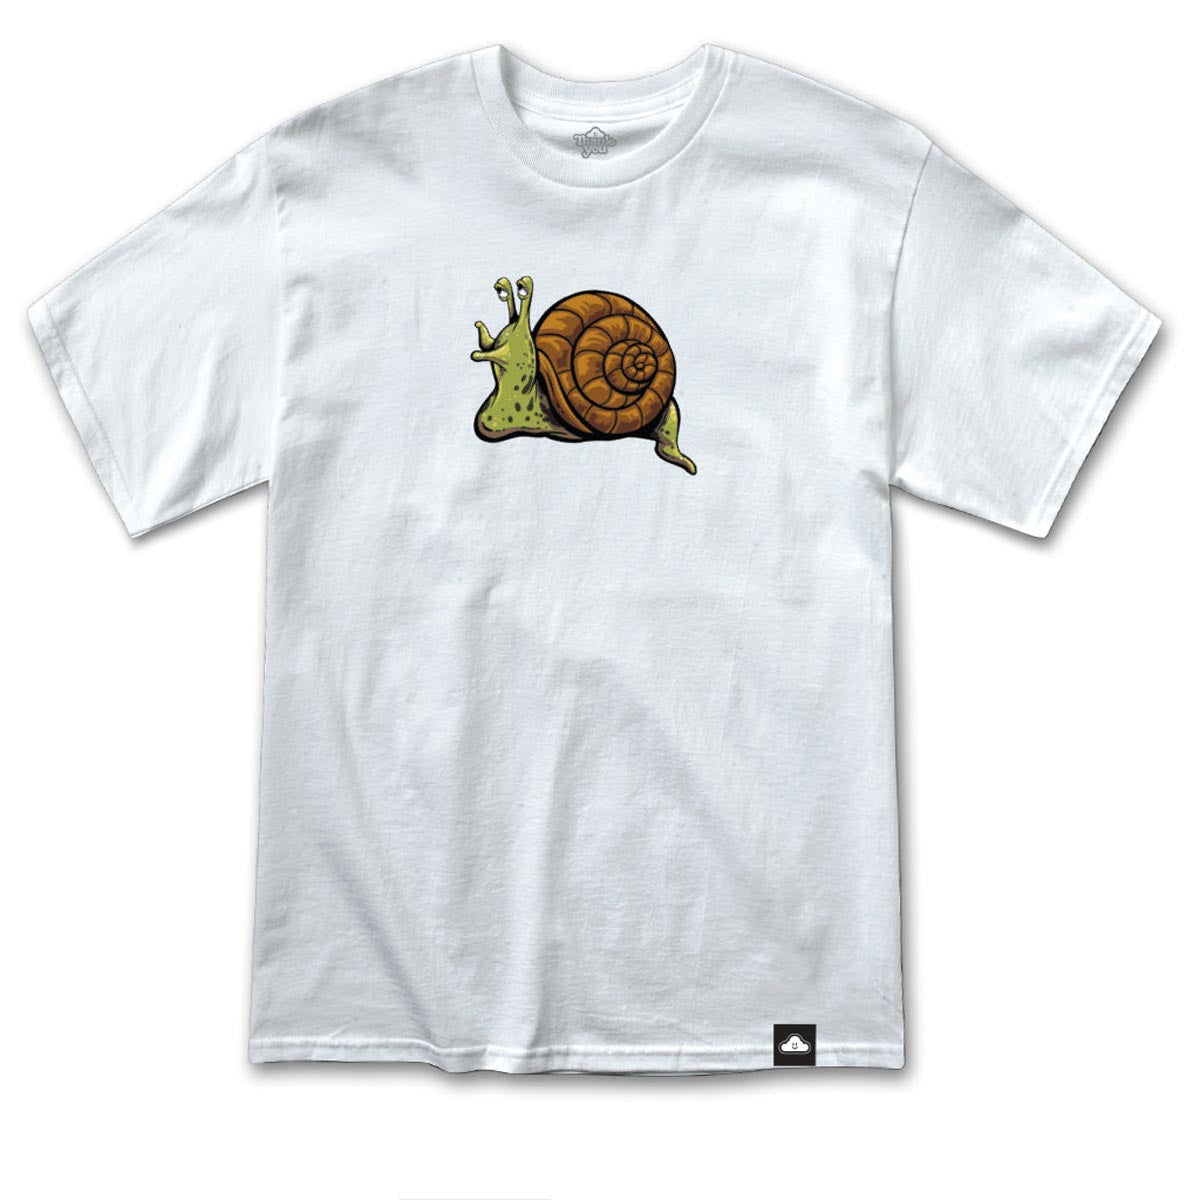 Thank You Snail T-Shirt - White image 1